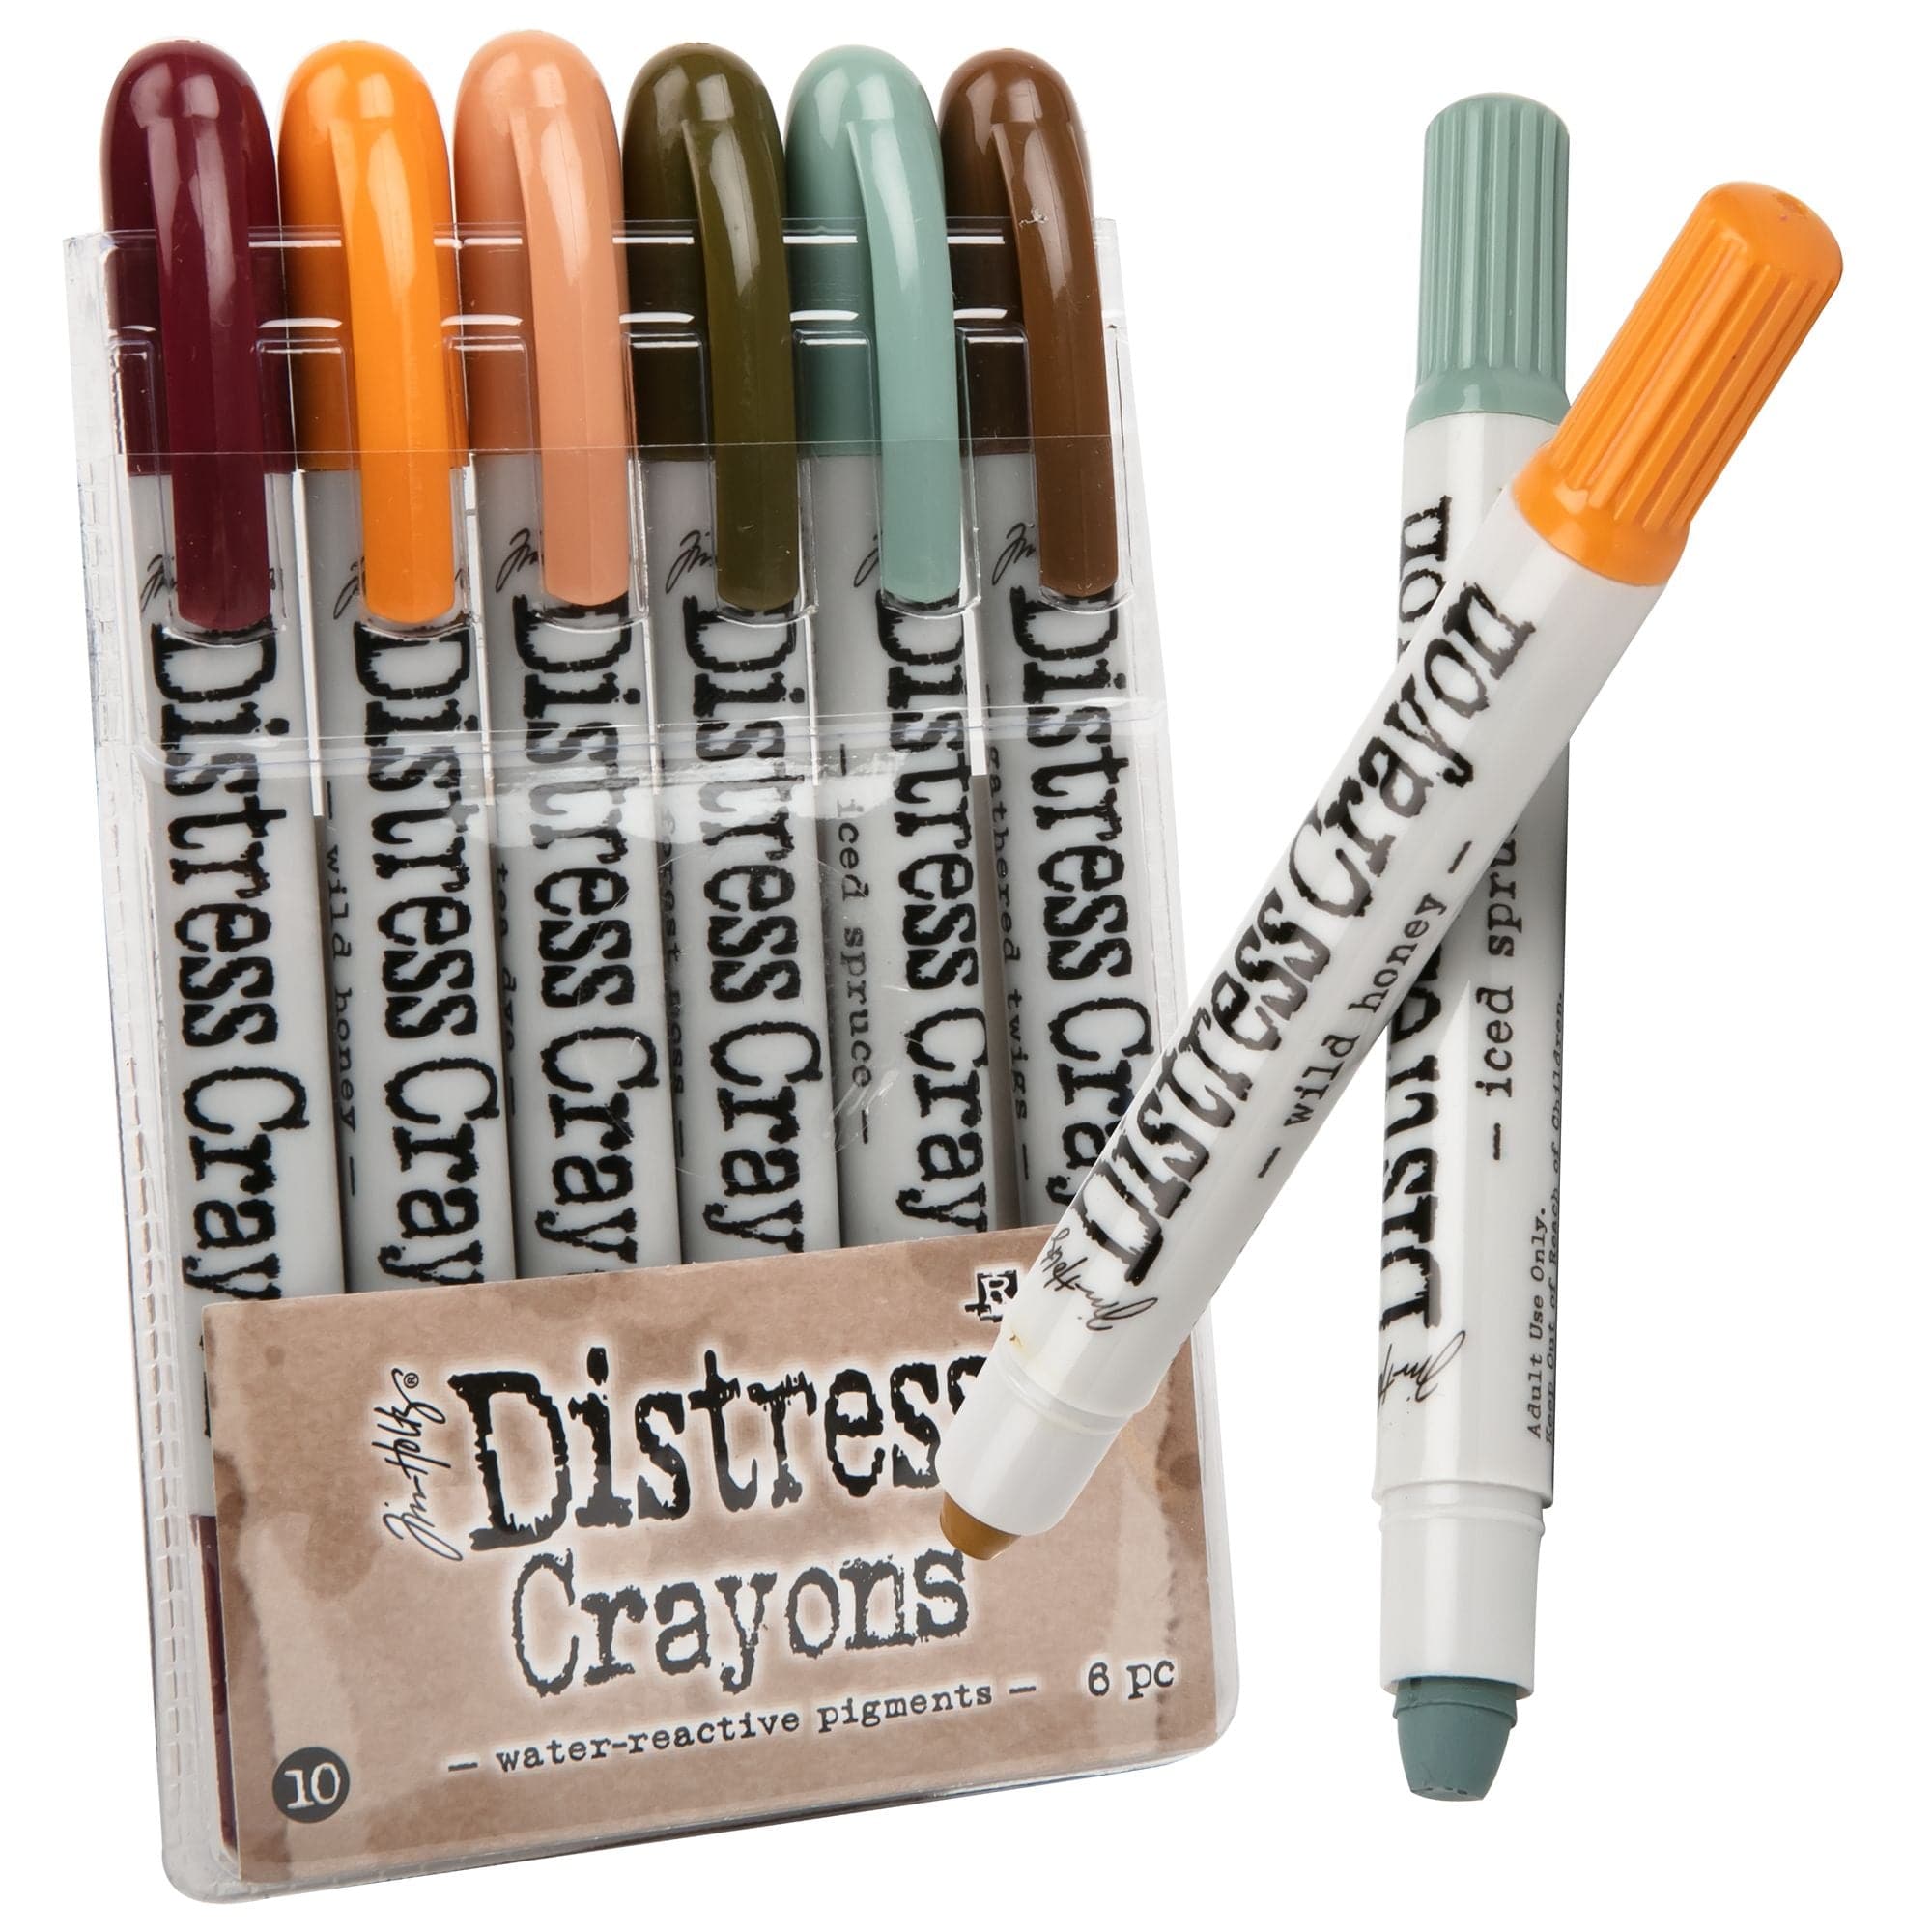 Writing Instruments  Distress crayons, Tim holtz distress crayons,  Distress crayons cards